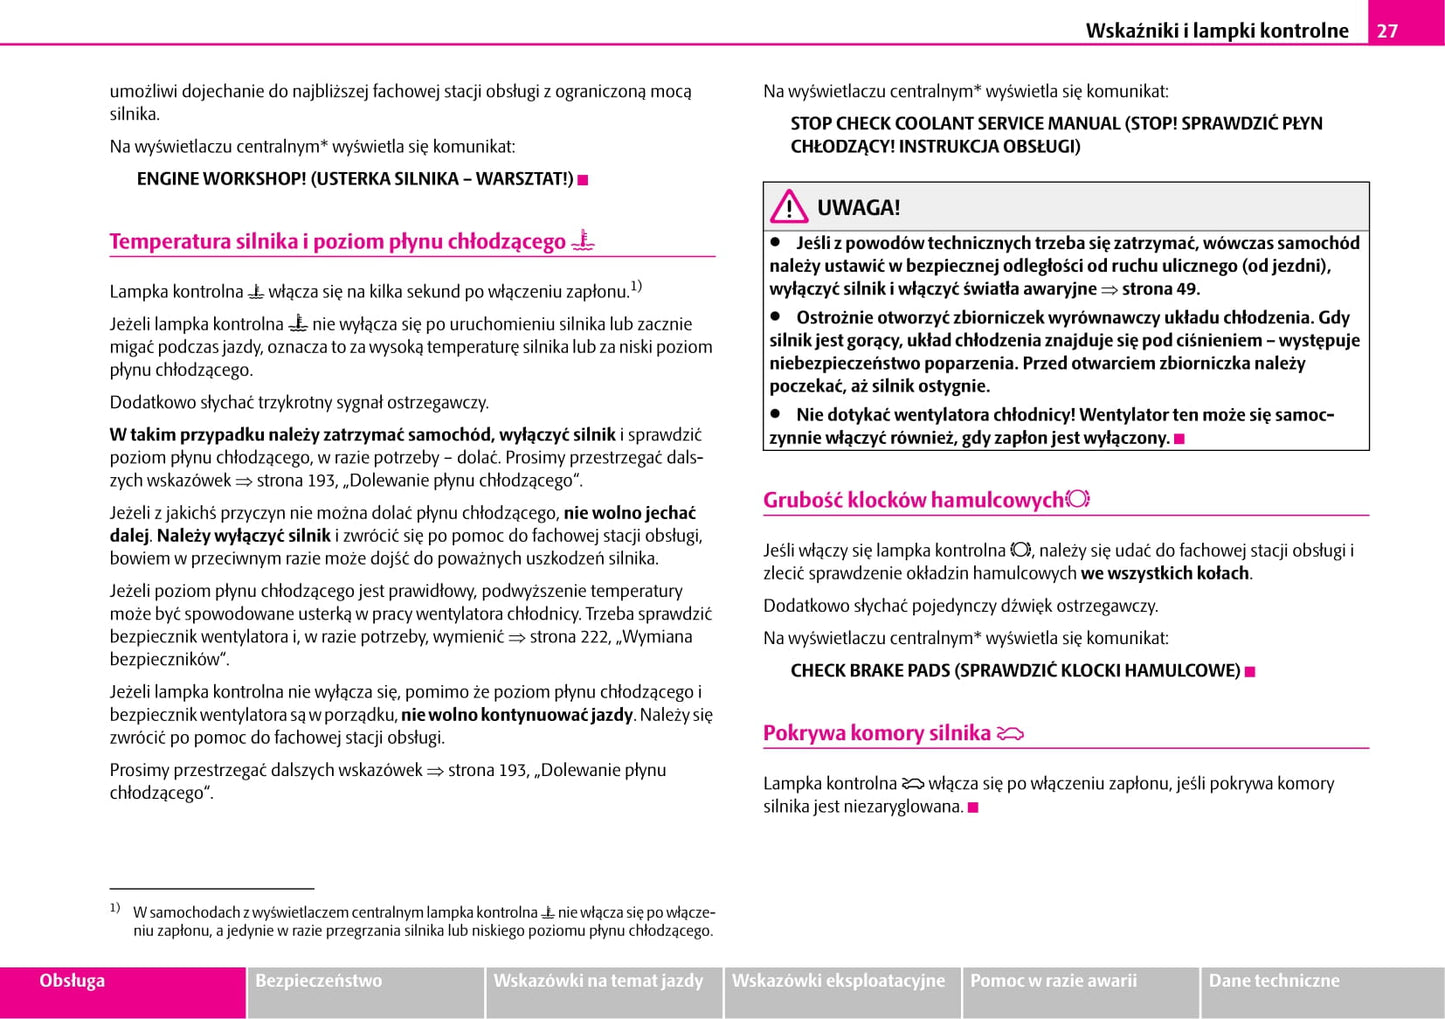 2007-2008 Skoda Superb Owner's Manual | Polish